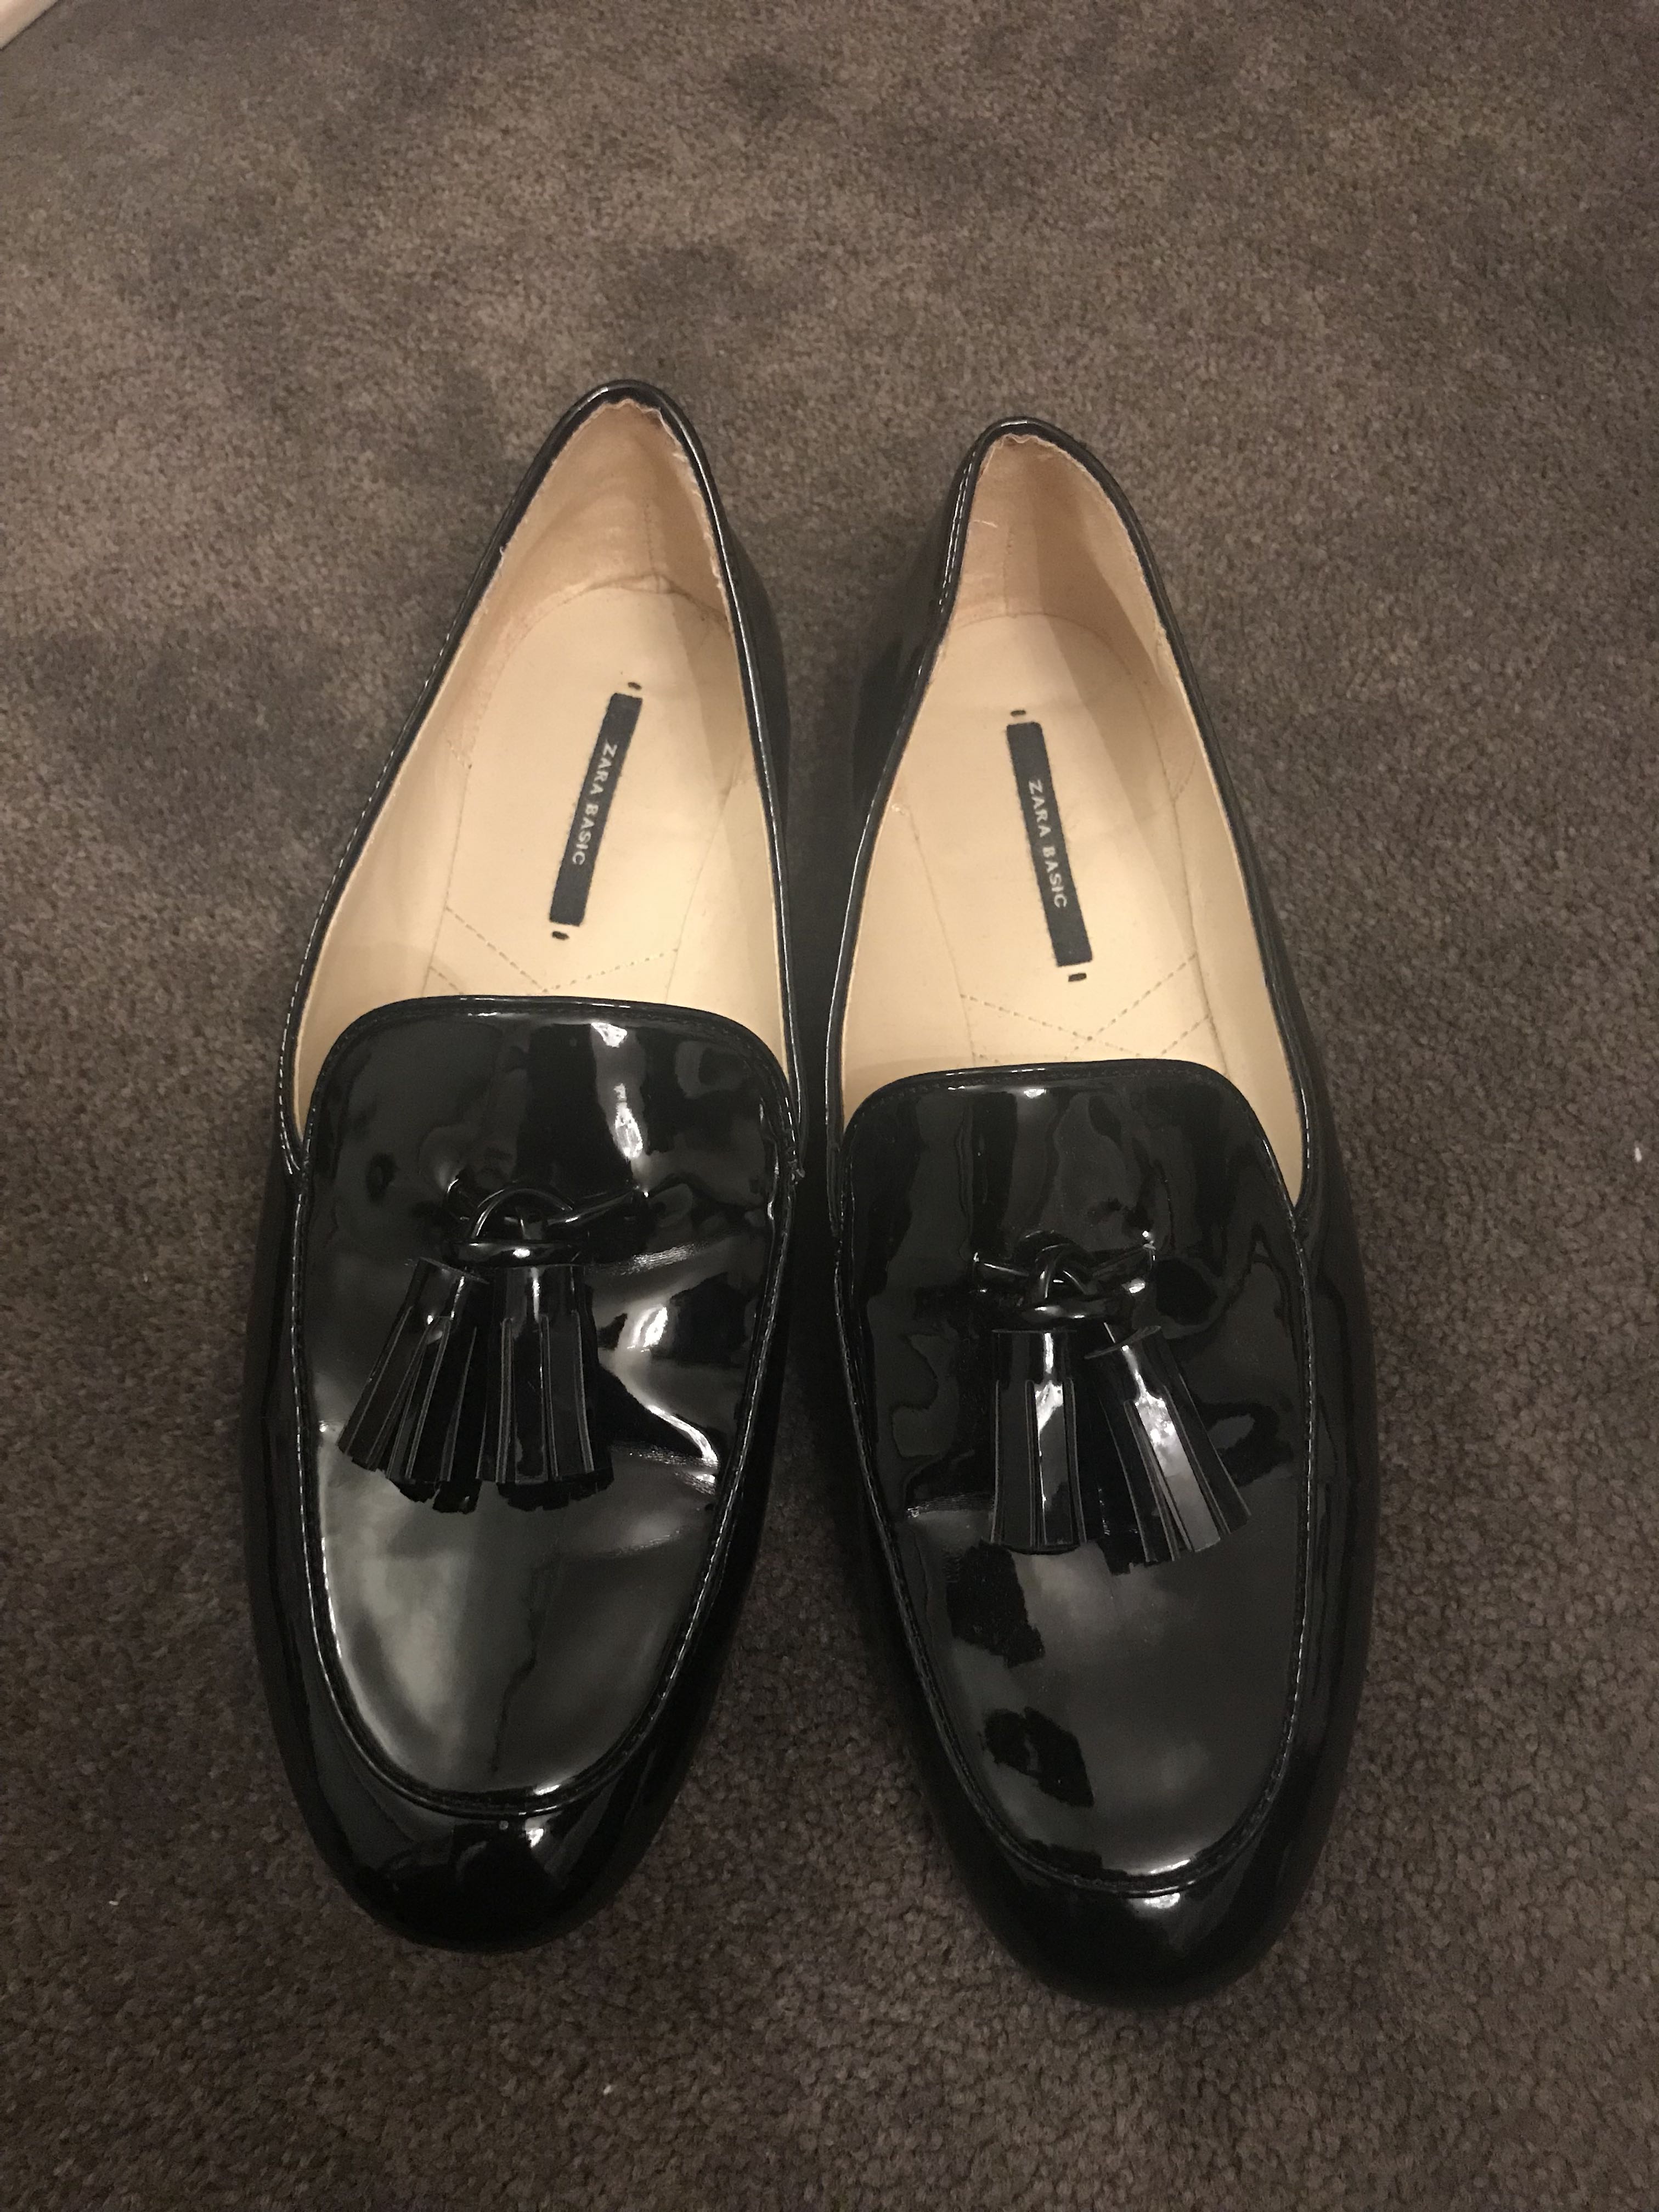 ZARA Patent Black Loafers / Flats 